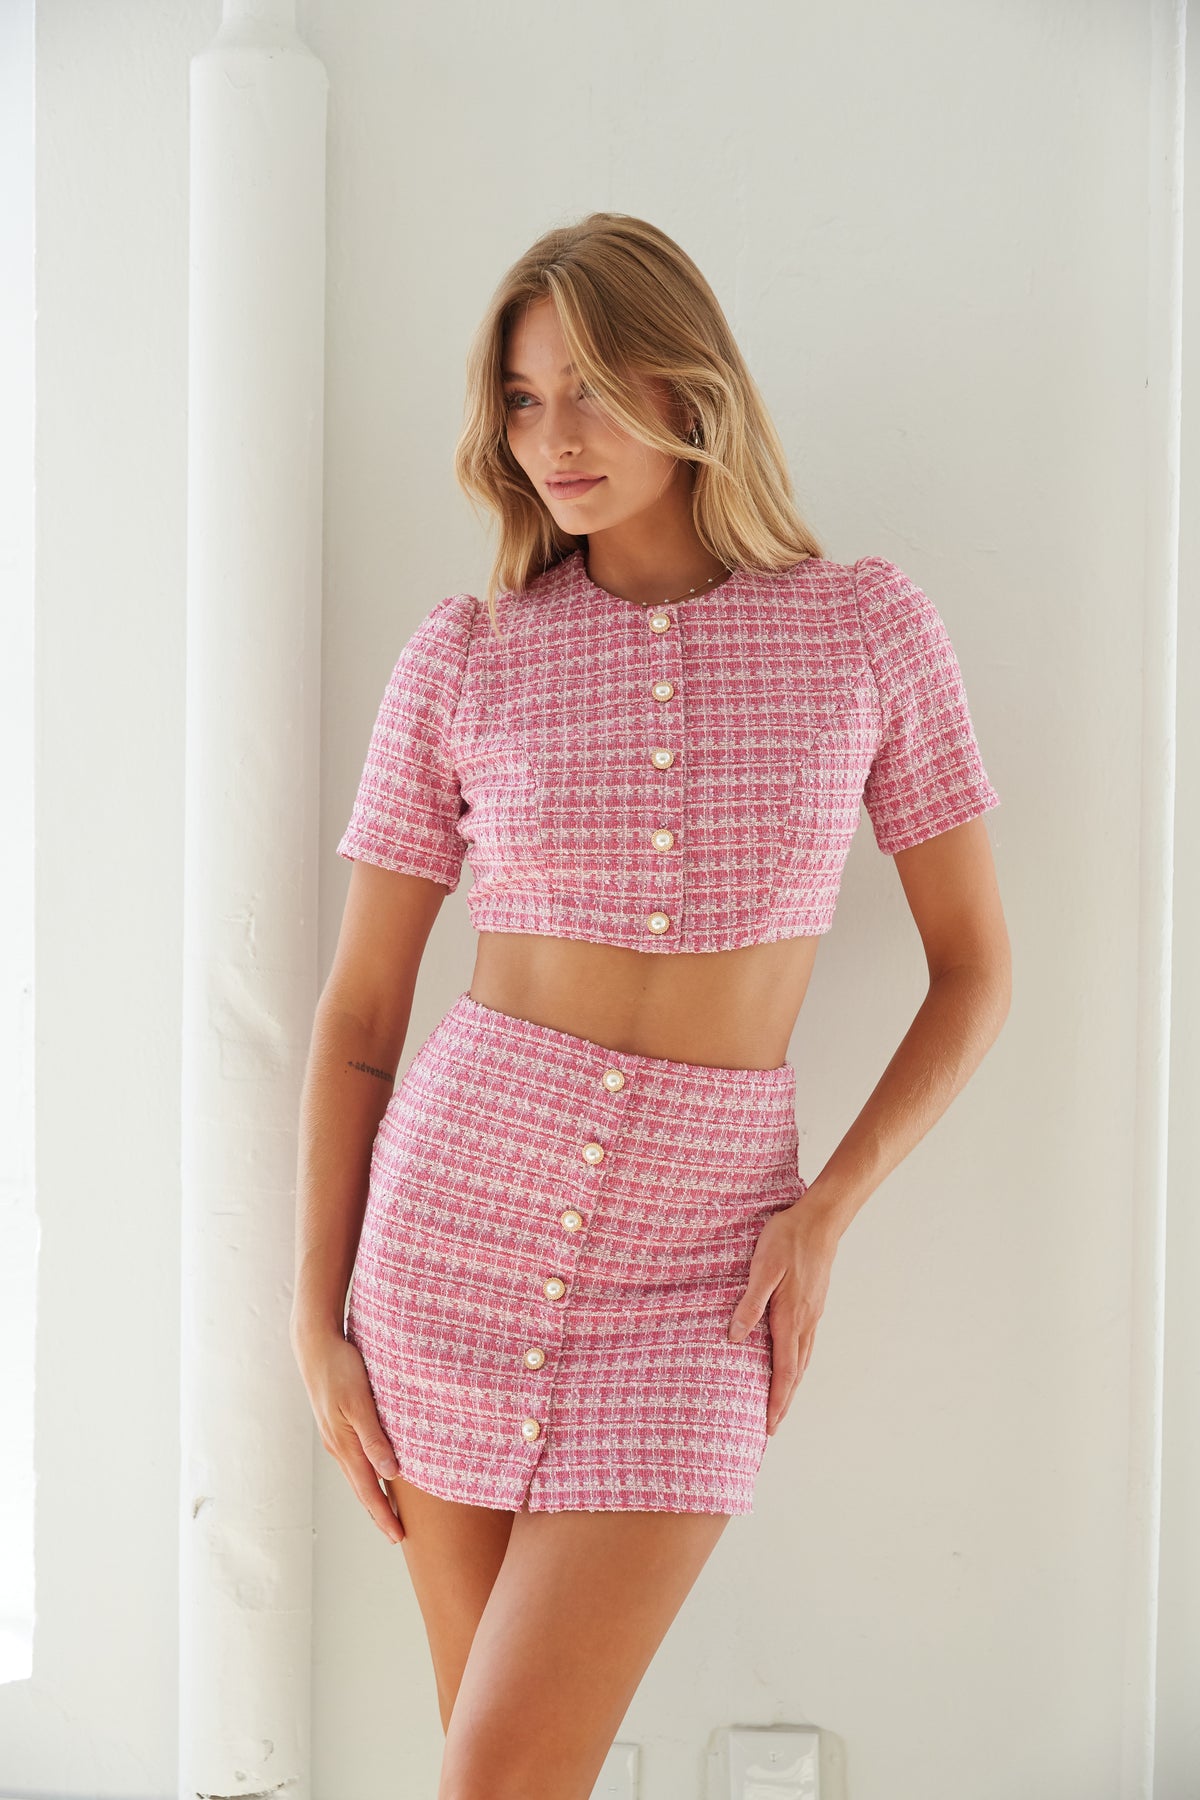 puff sleeve pink tweed set - elle woods - plaid outfit - plaid set - gingham set - gingham pattern